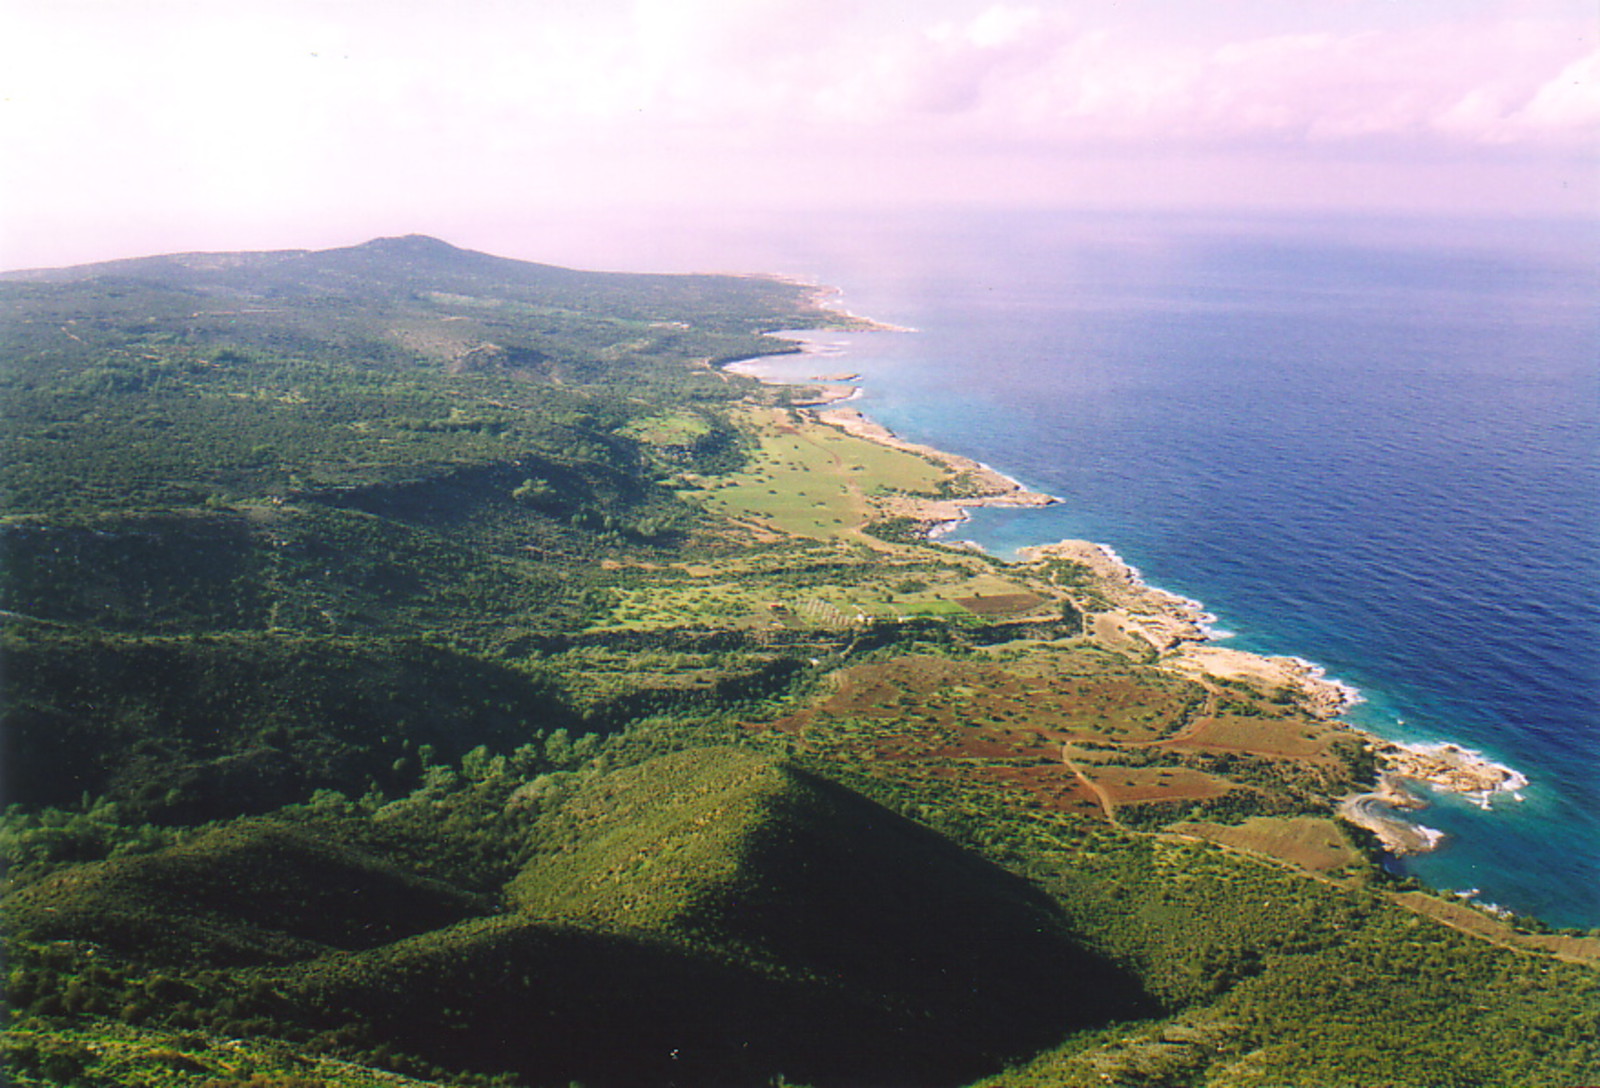 The Akamas Peninsula